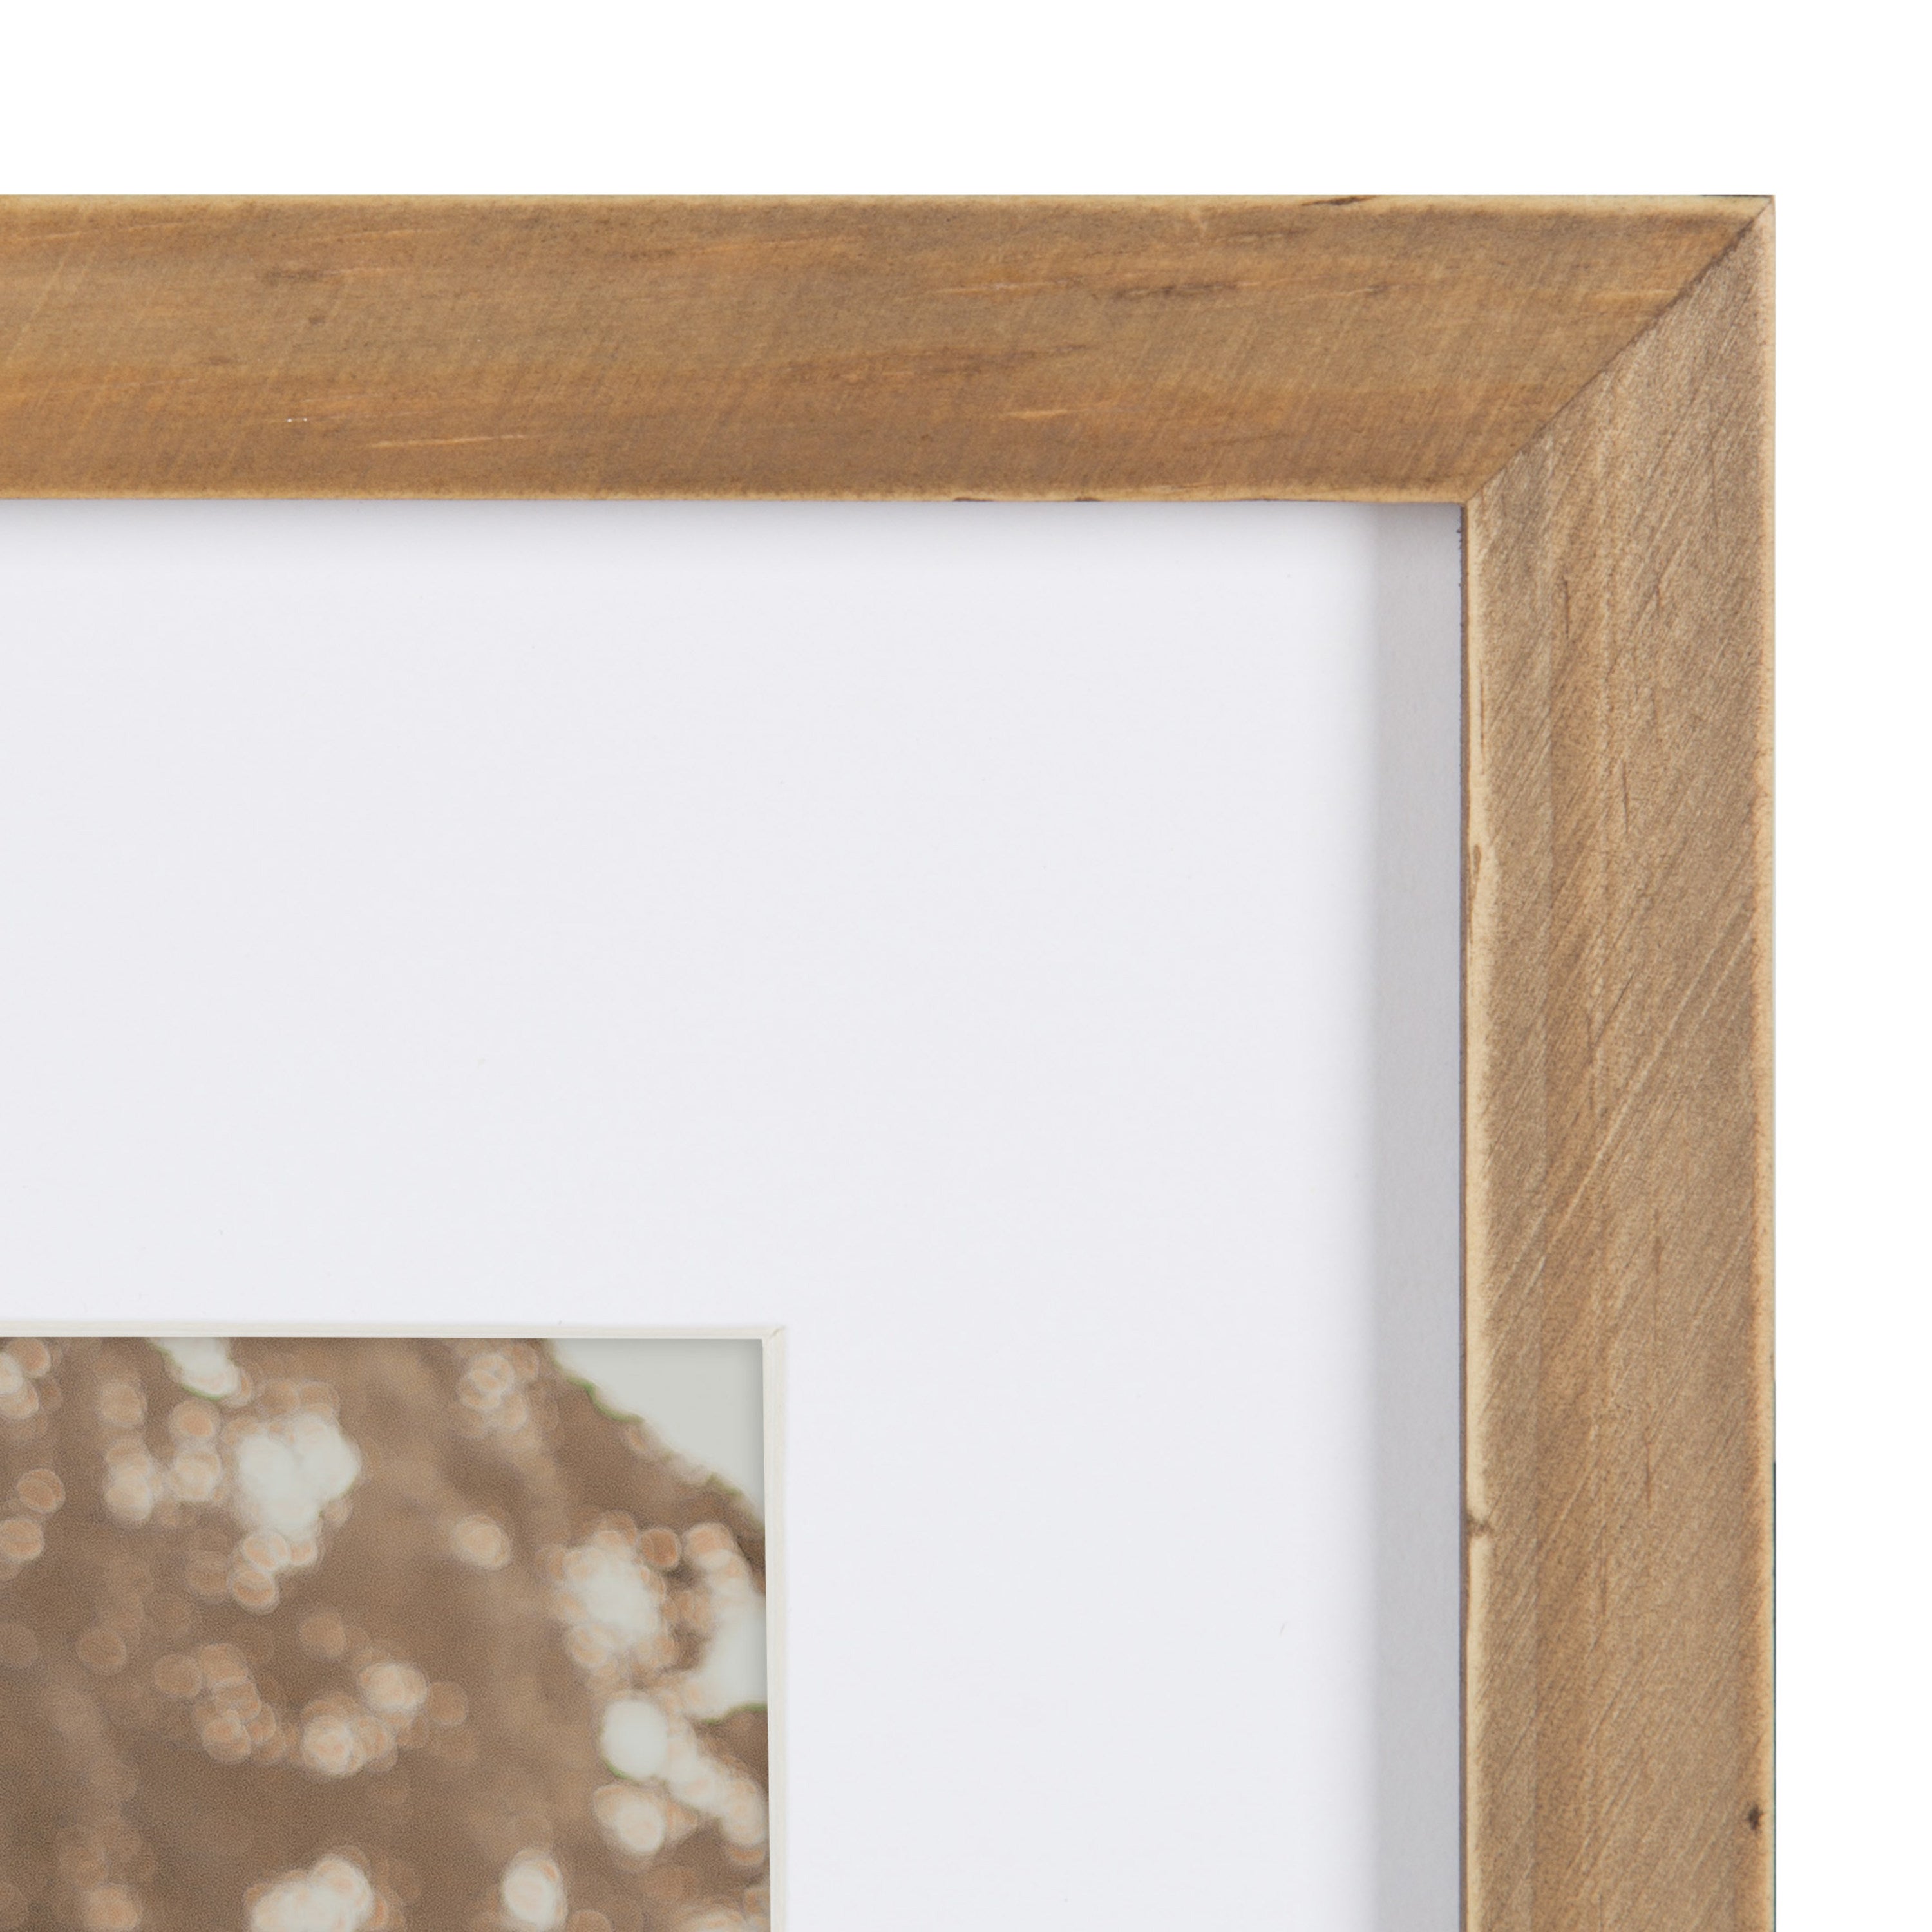  DesignOvation Gallery Wood Photo Frame Set for